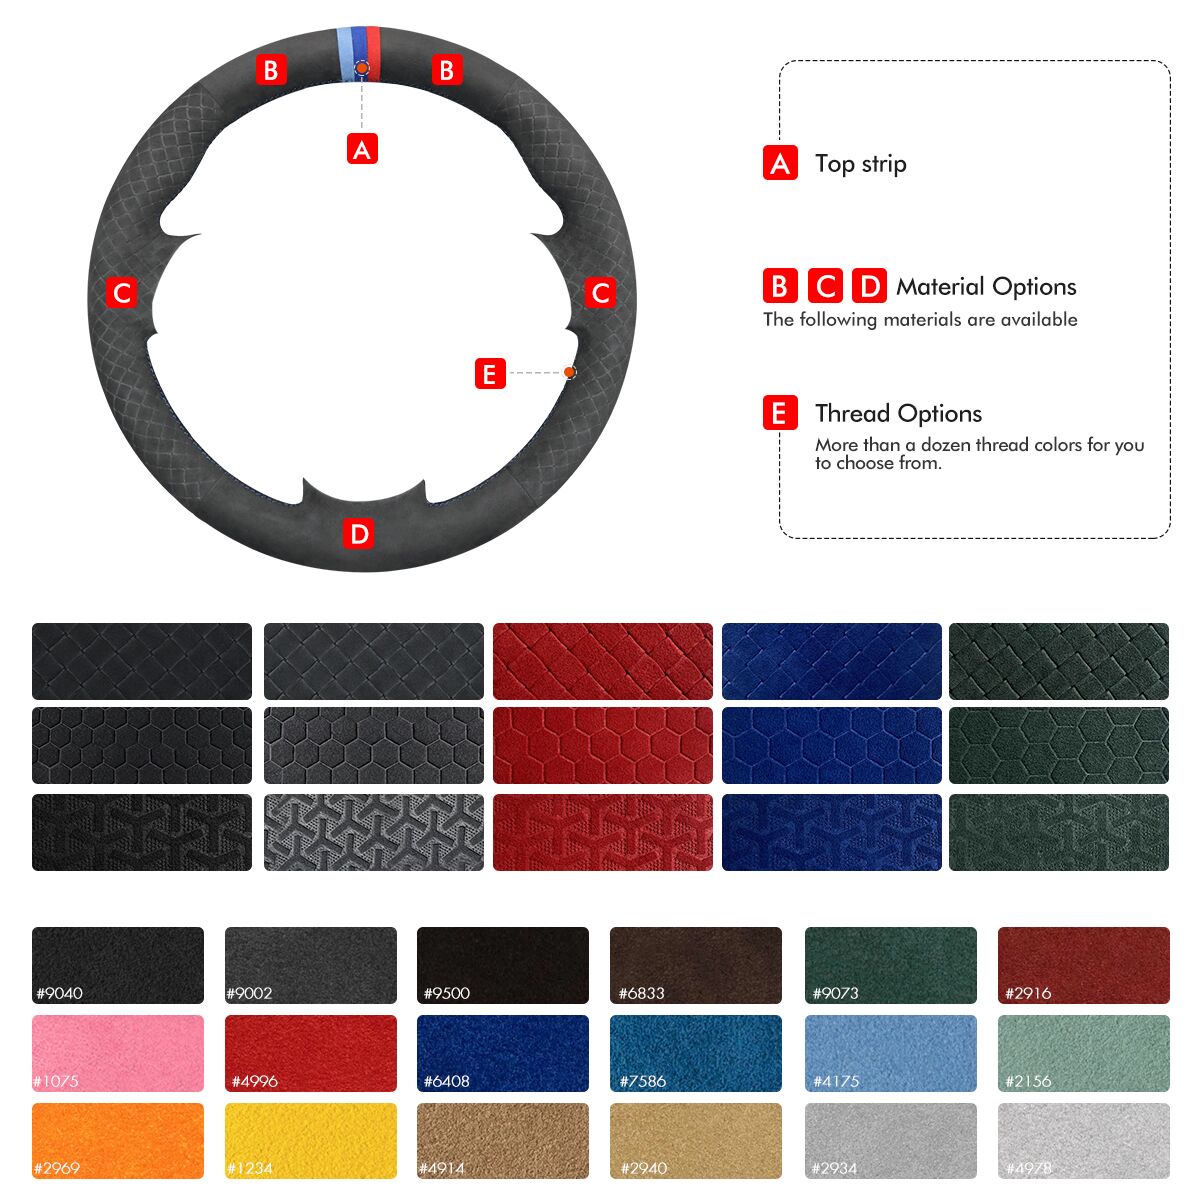 MEWANT Hand Stitch Black Leather Car Steering Wheel Cover for Honda Fit 2014 / Vezel 2015-2017